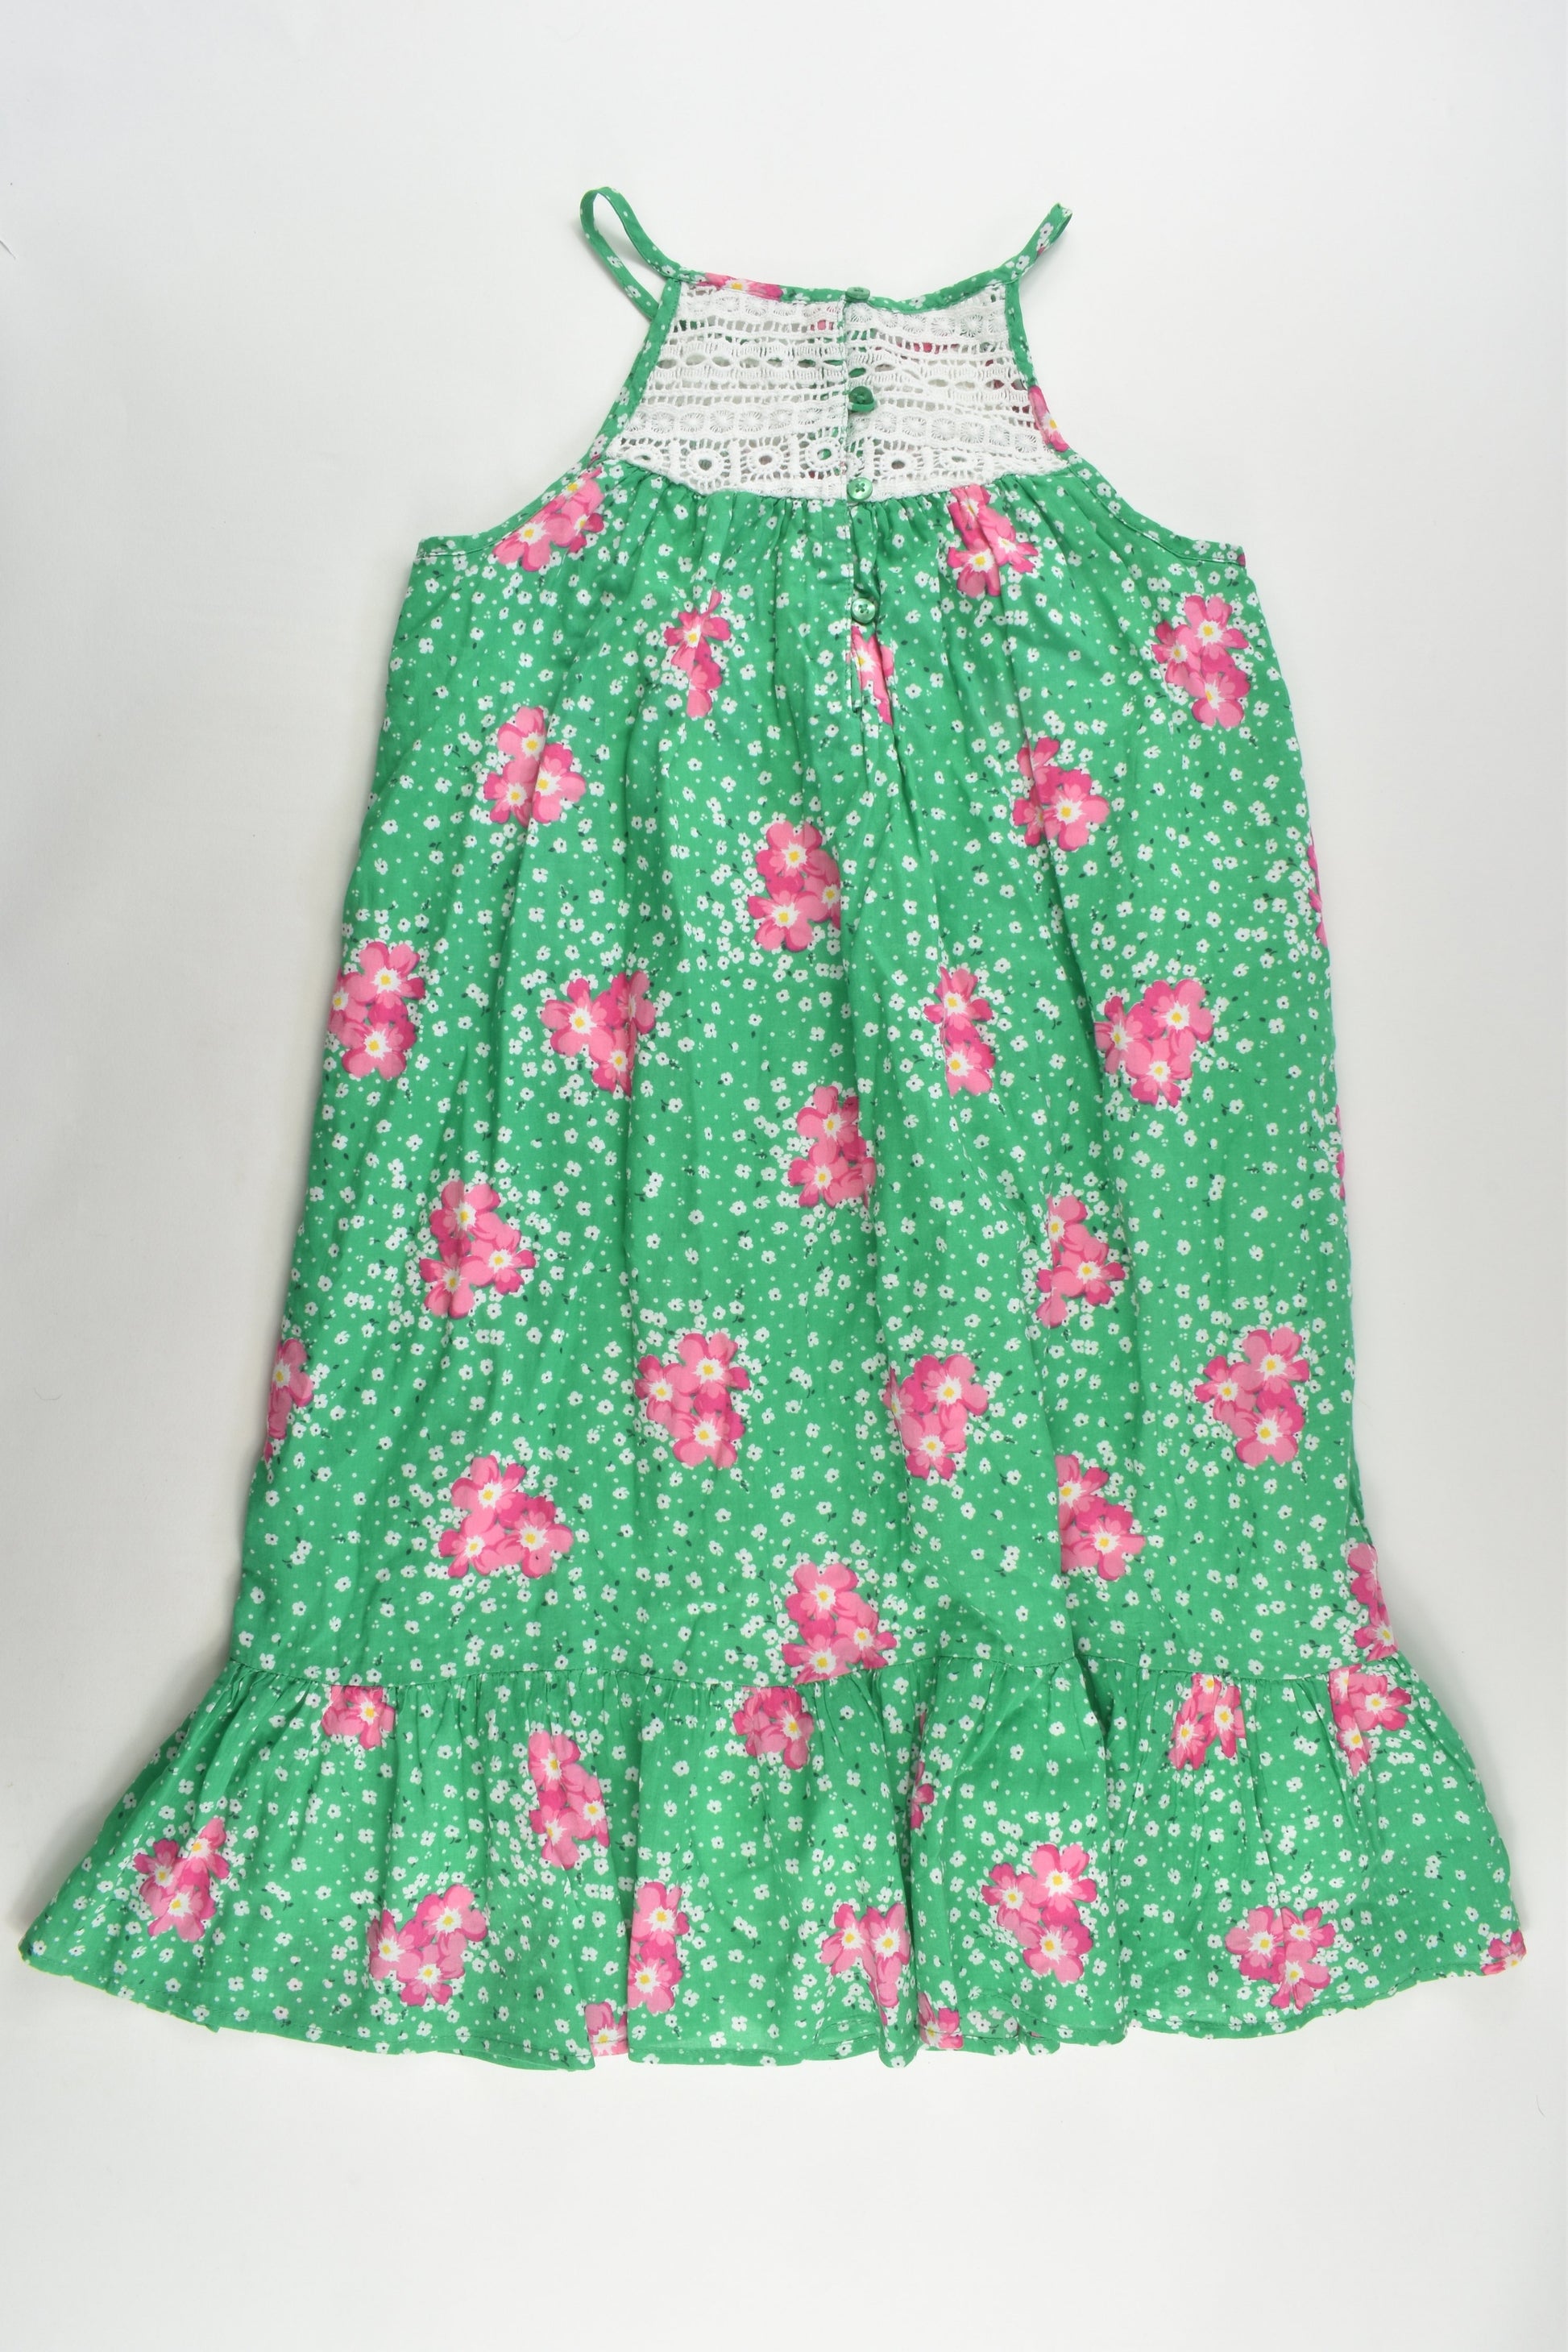 Milkshake Size 8 Lined Lace Front Floral Dress